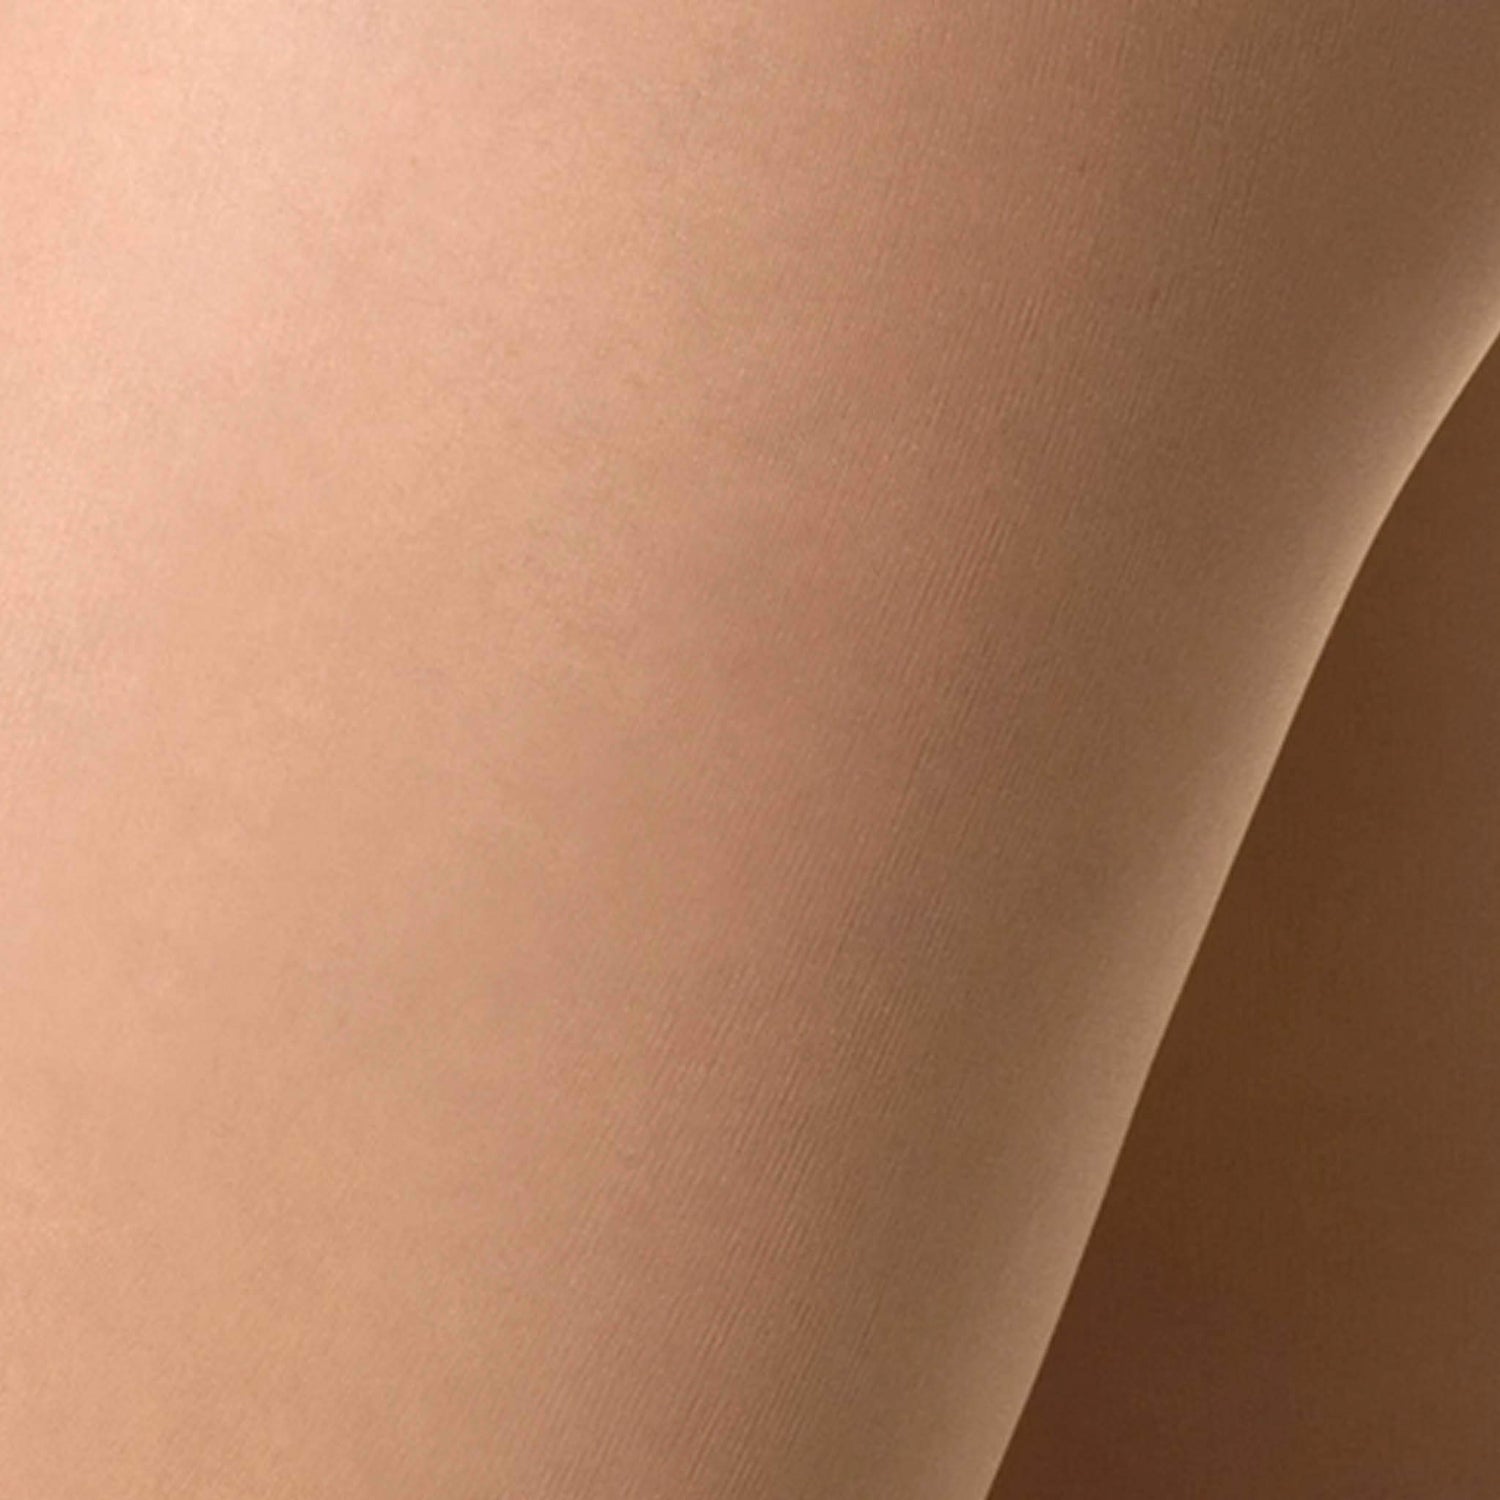 Sheer Light Nude Stockings Australia